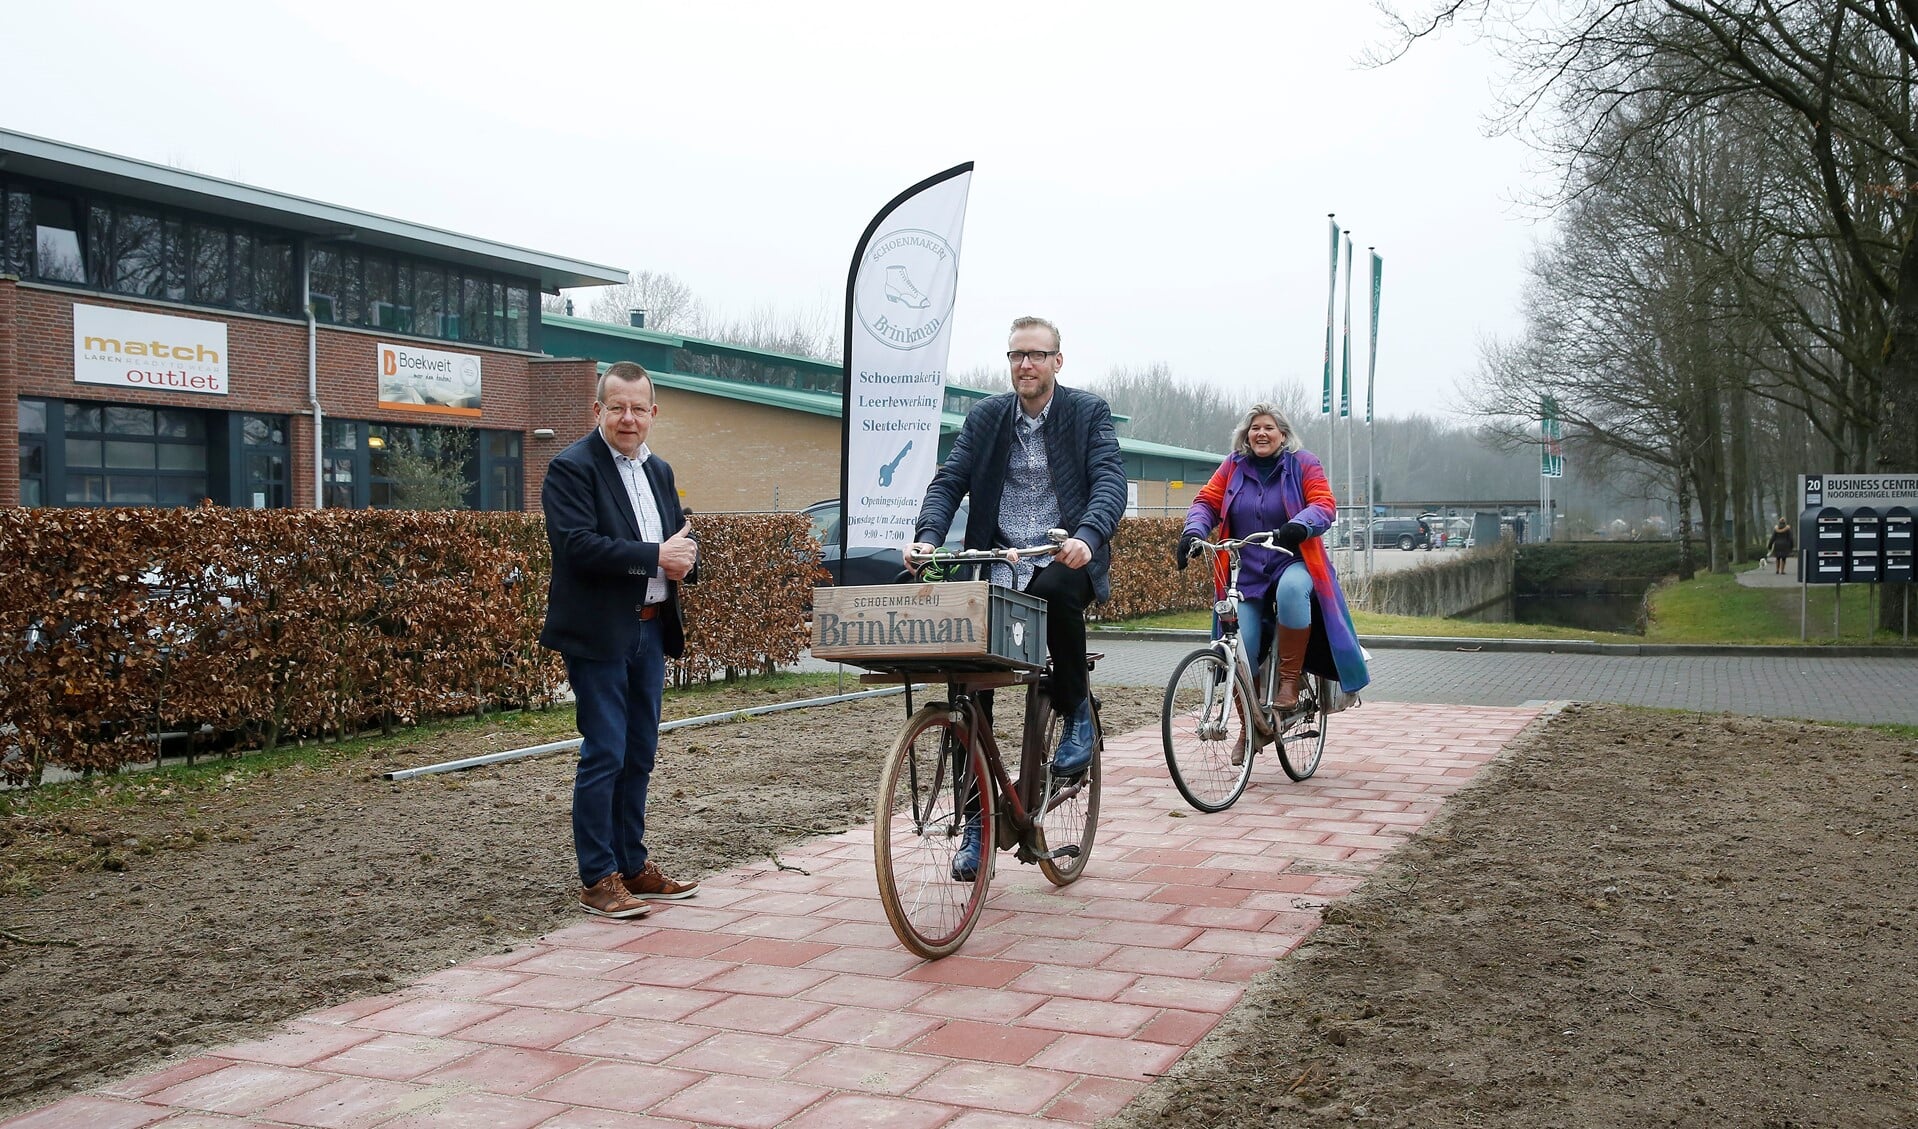 Wethouder Theo Reijn met de fietsende ondernemers Björn Brinkman en Deirdre van der Wolk.